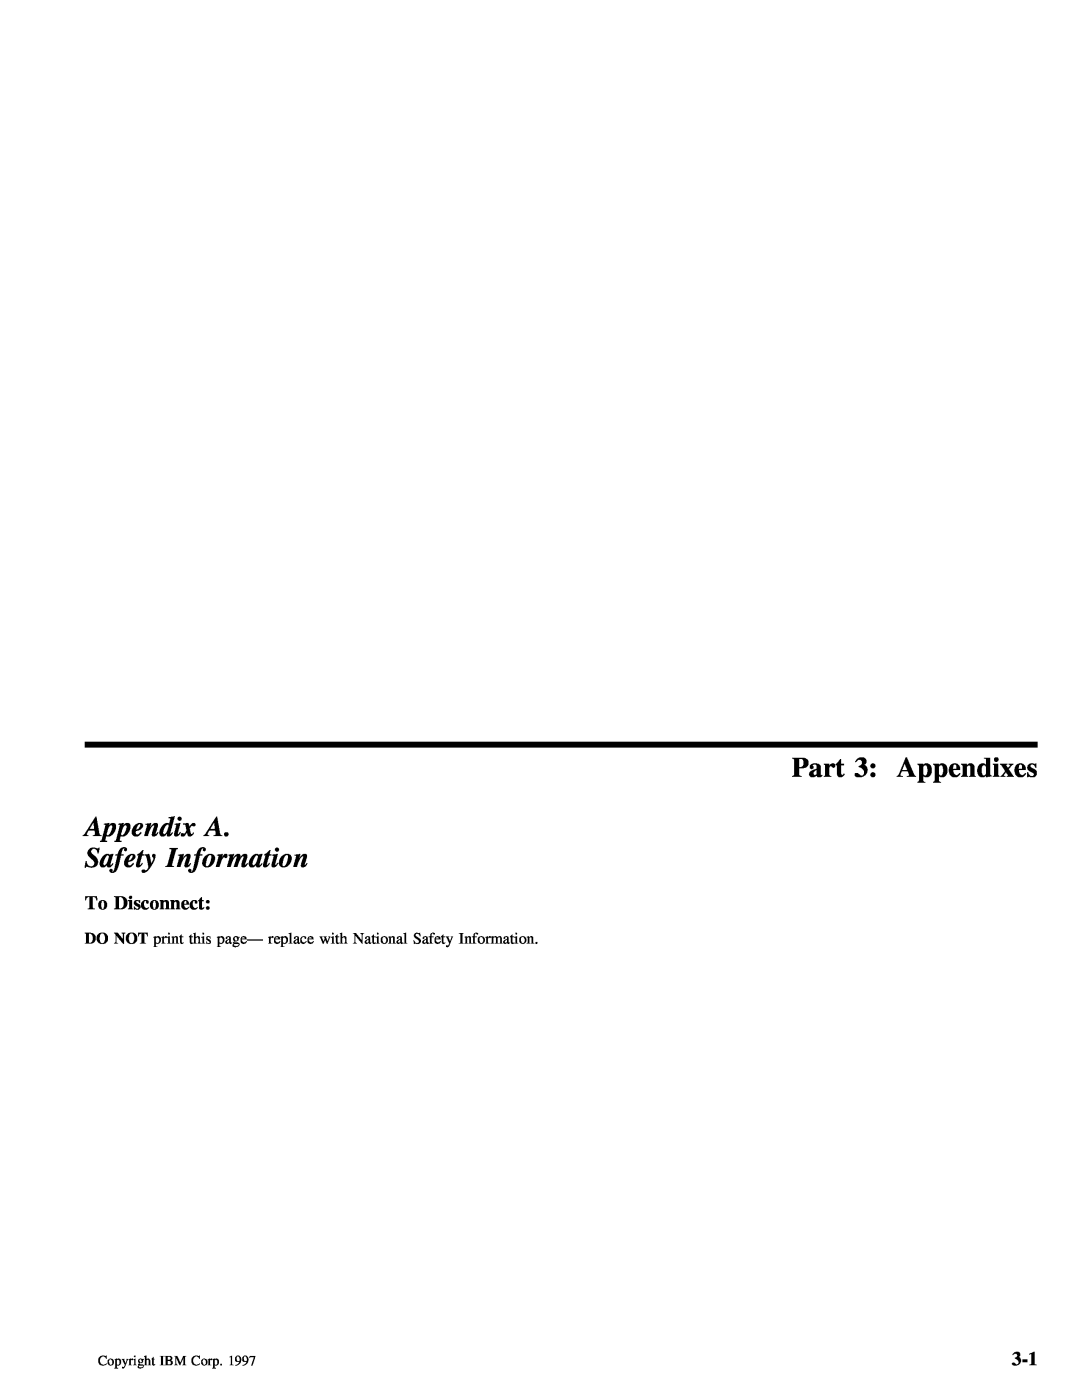 IBM ATA-3 manual Appendix A Safety Information, To Disconnect, Part 3 Appendixes 